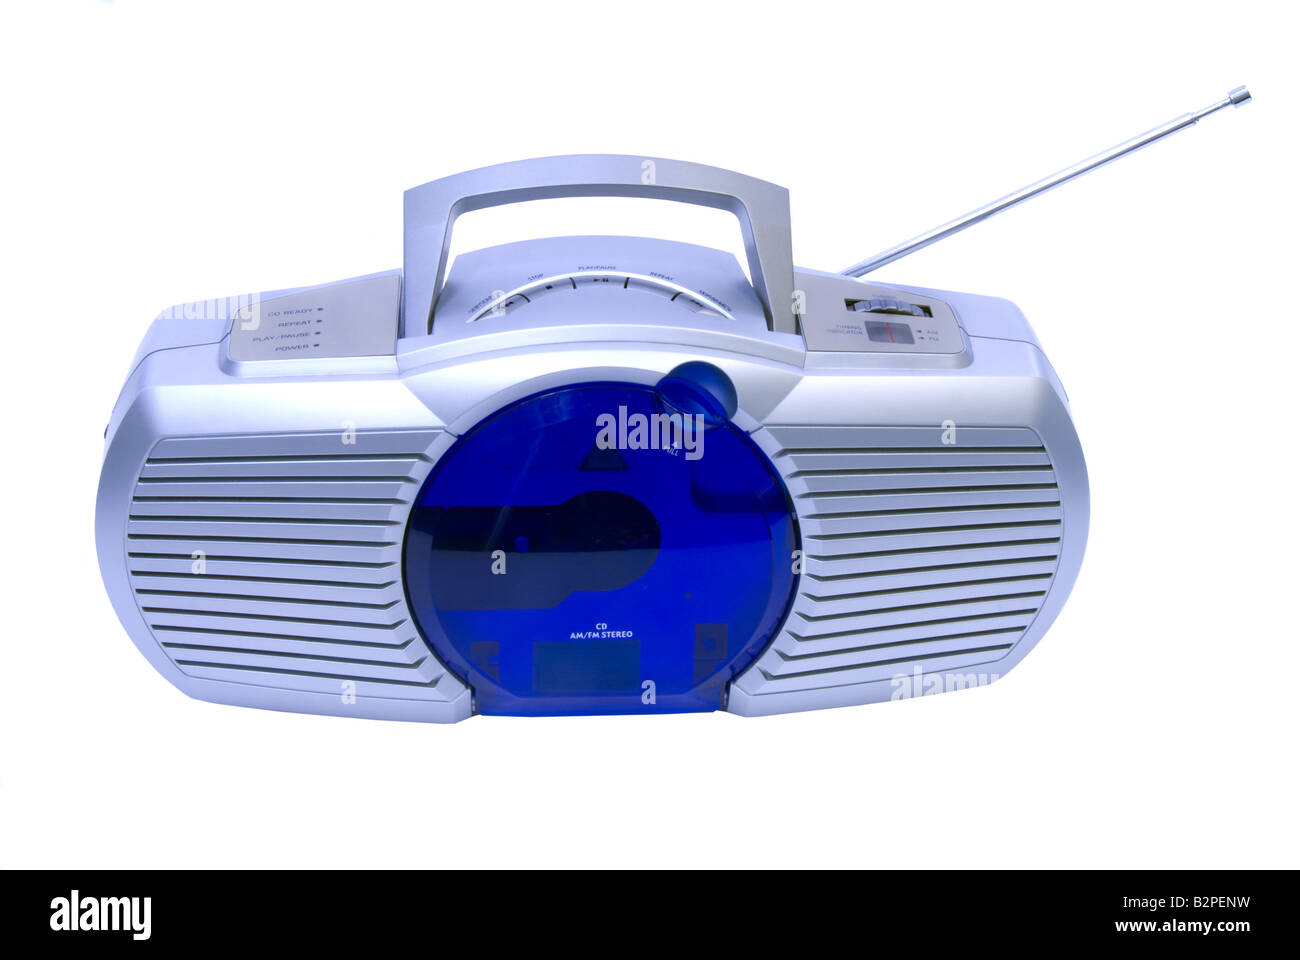 Un moderne am fm radio lecteur cd isolated on white Banque D'Images